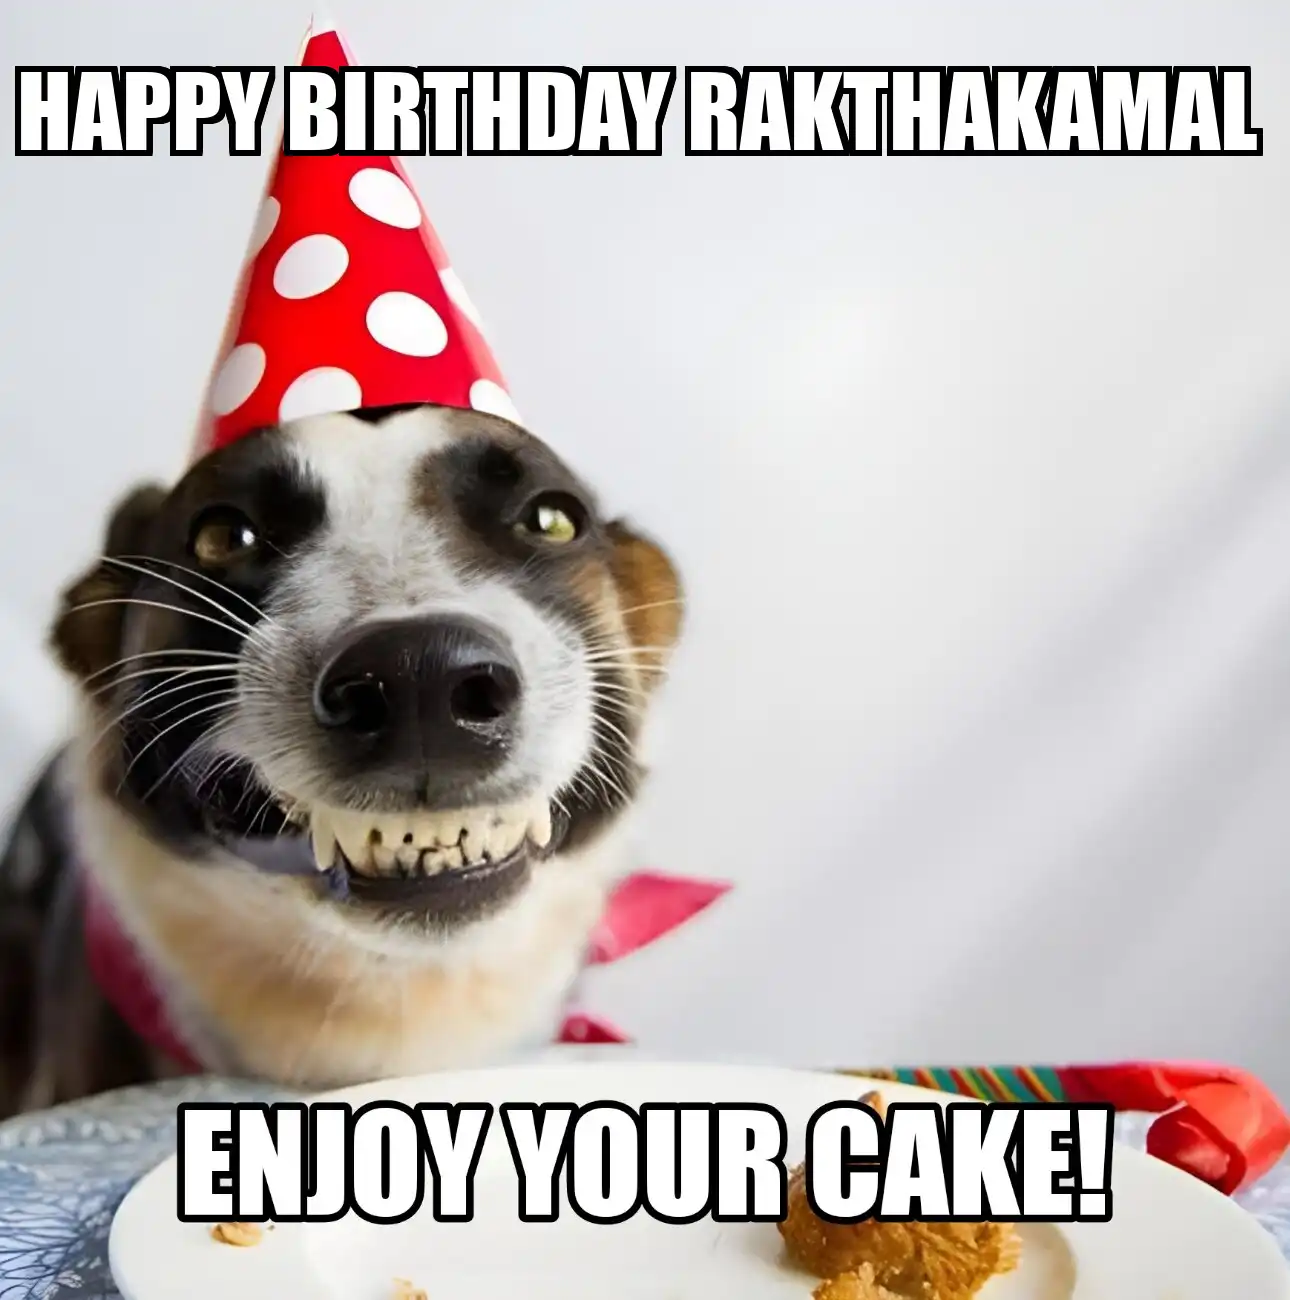 Happy Birthday Rakthakamal Enjoy Your Cake Dog Meme